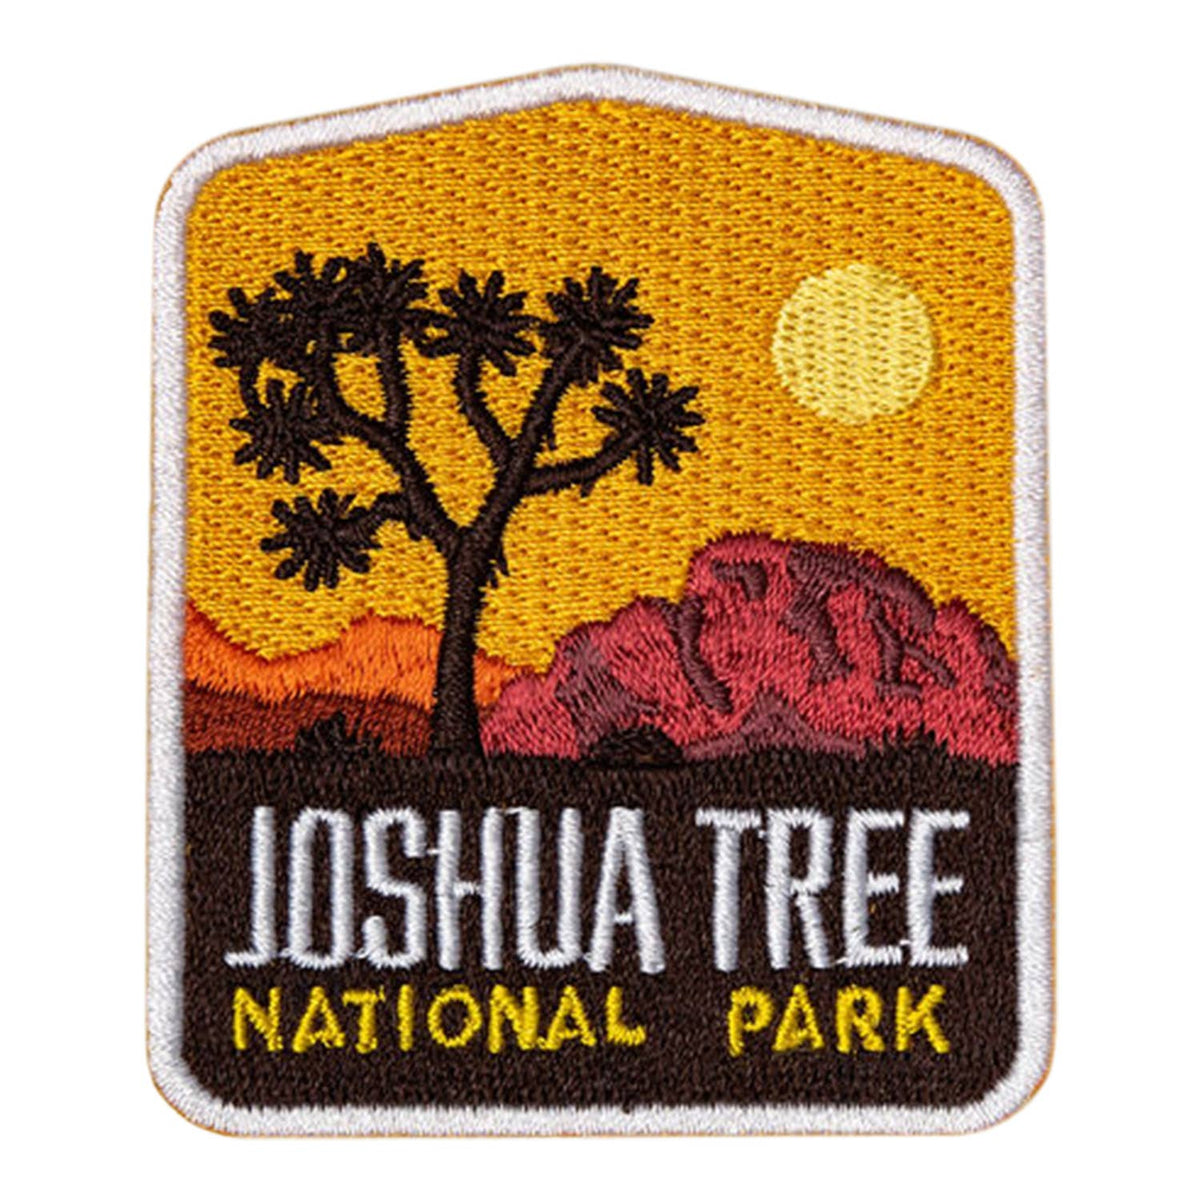 Joshua Tree National Park Iron-on Patch